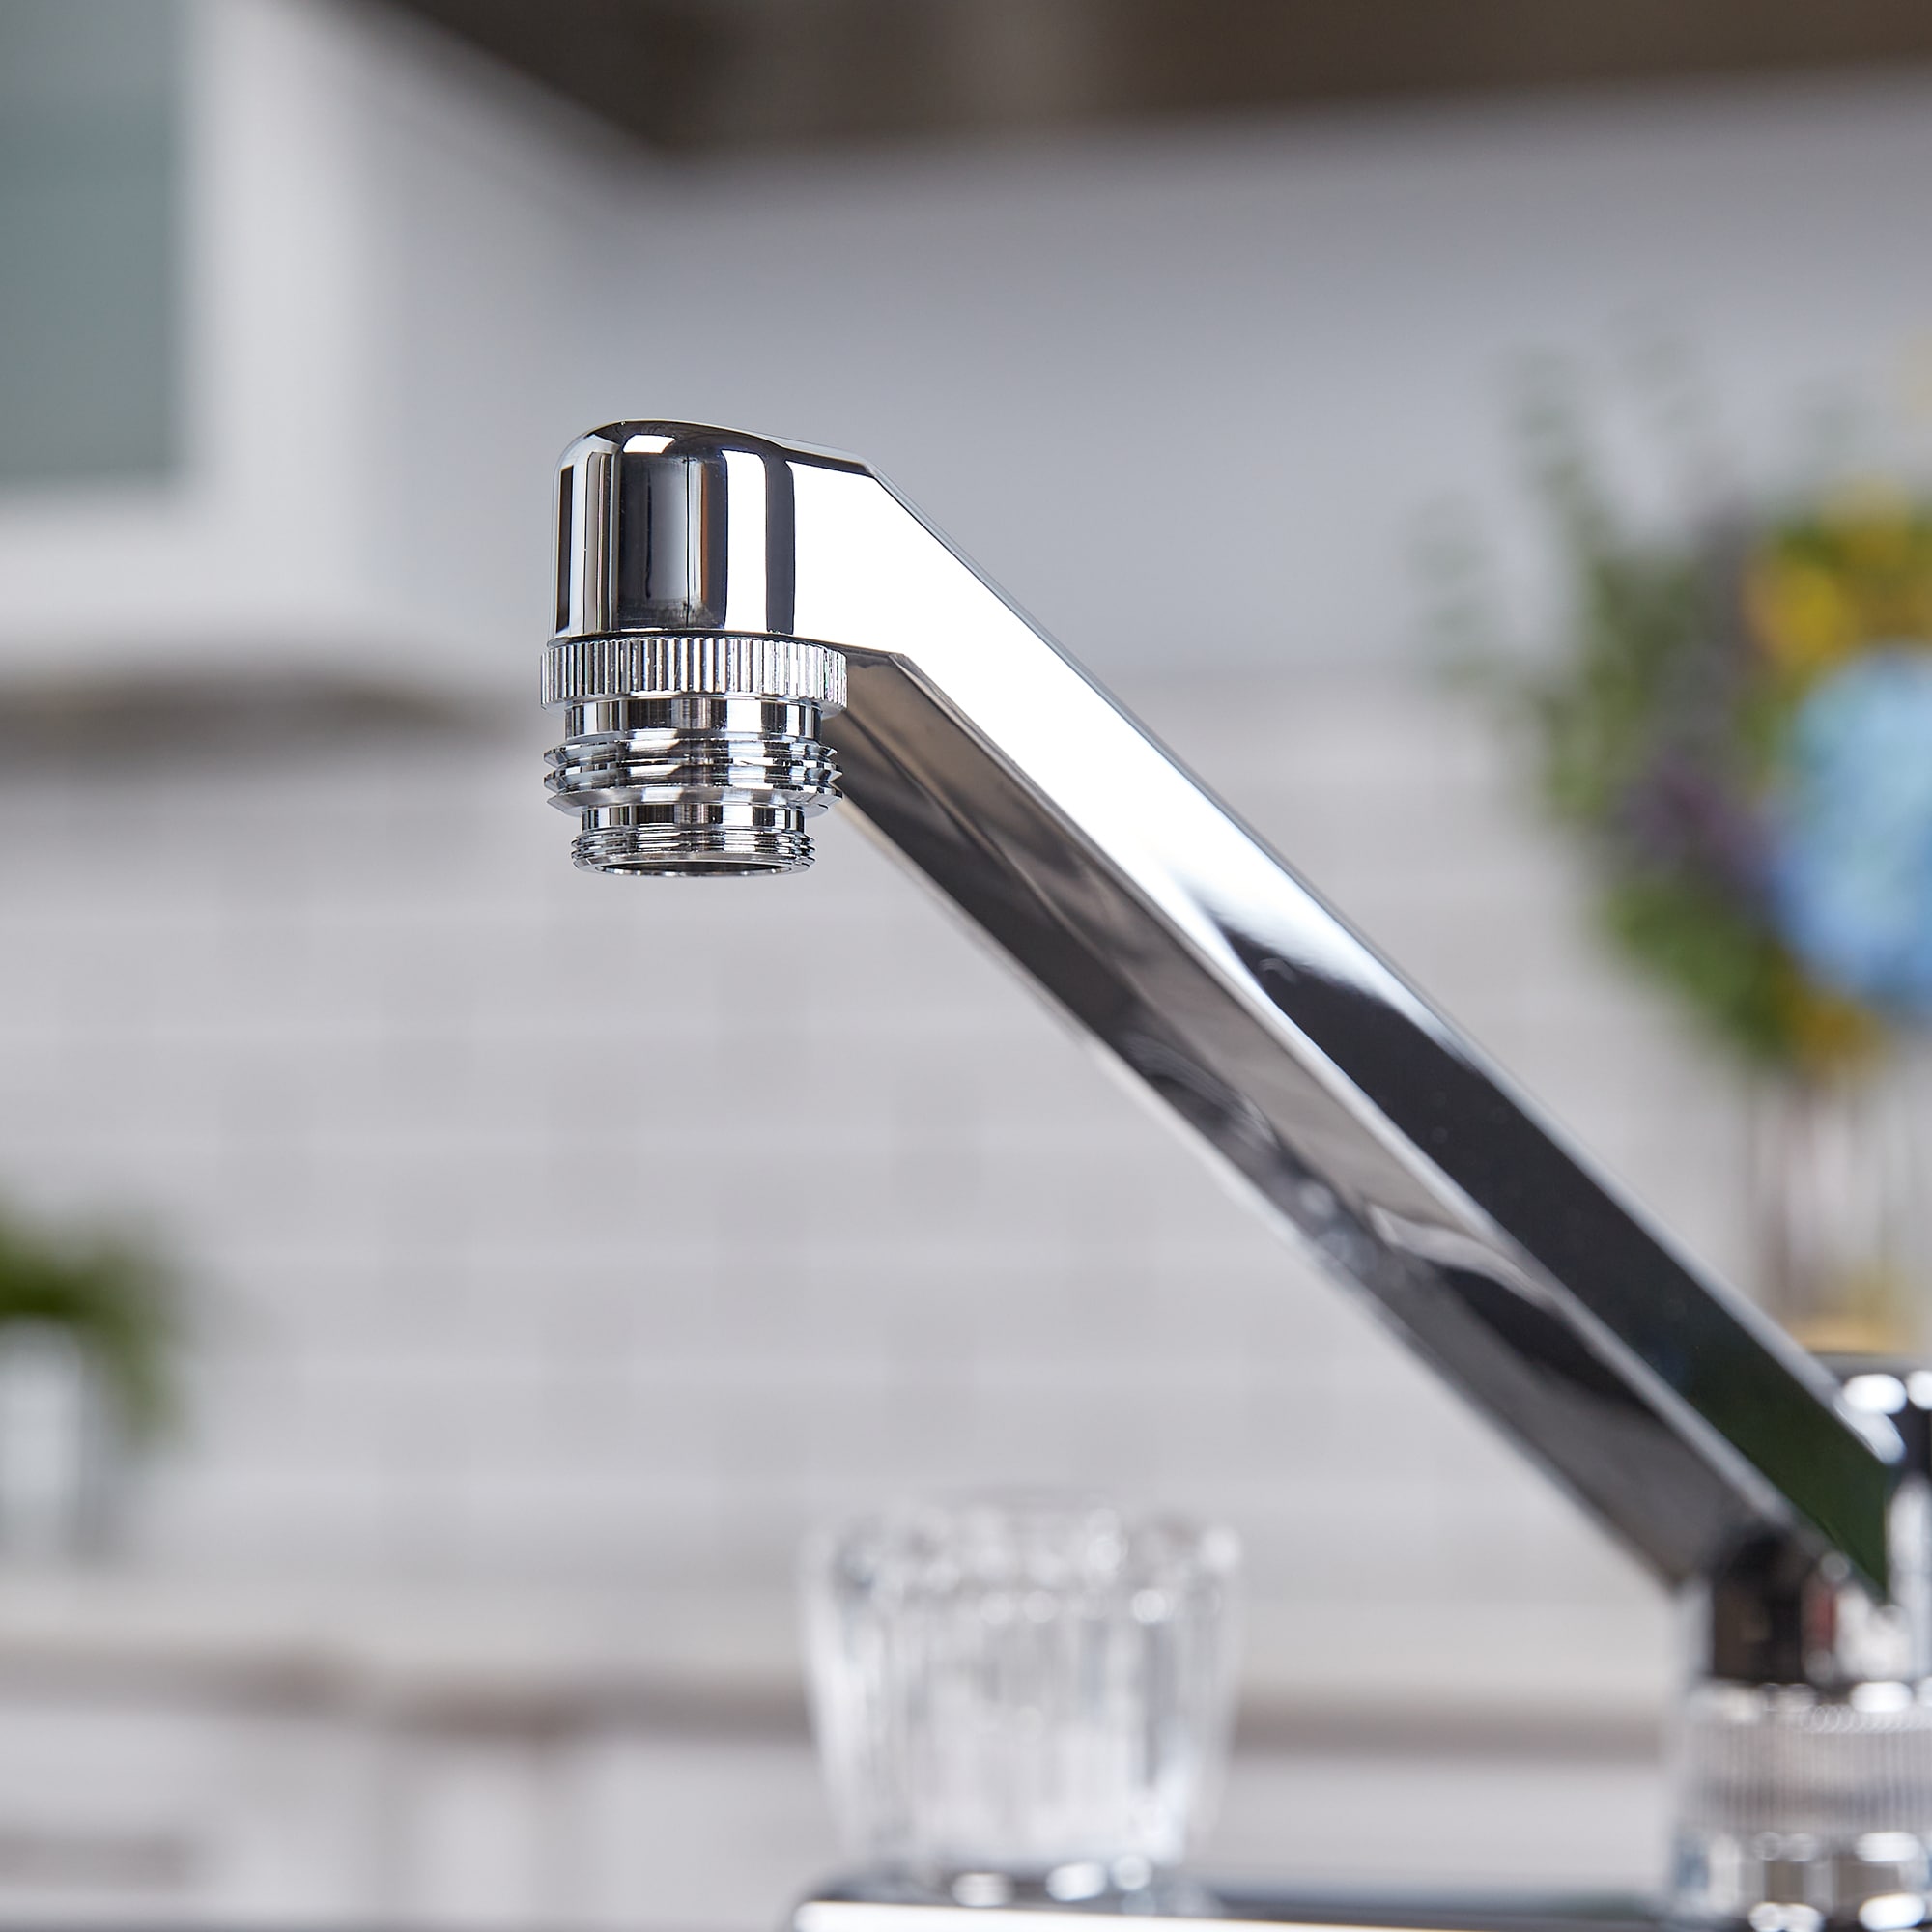 Faucet Tap Connector Kitchen Aerator Adapter Water Saving Adaptor